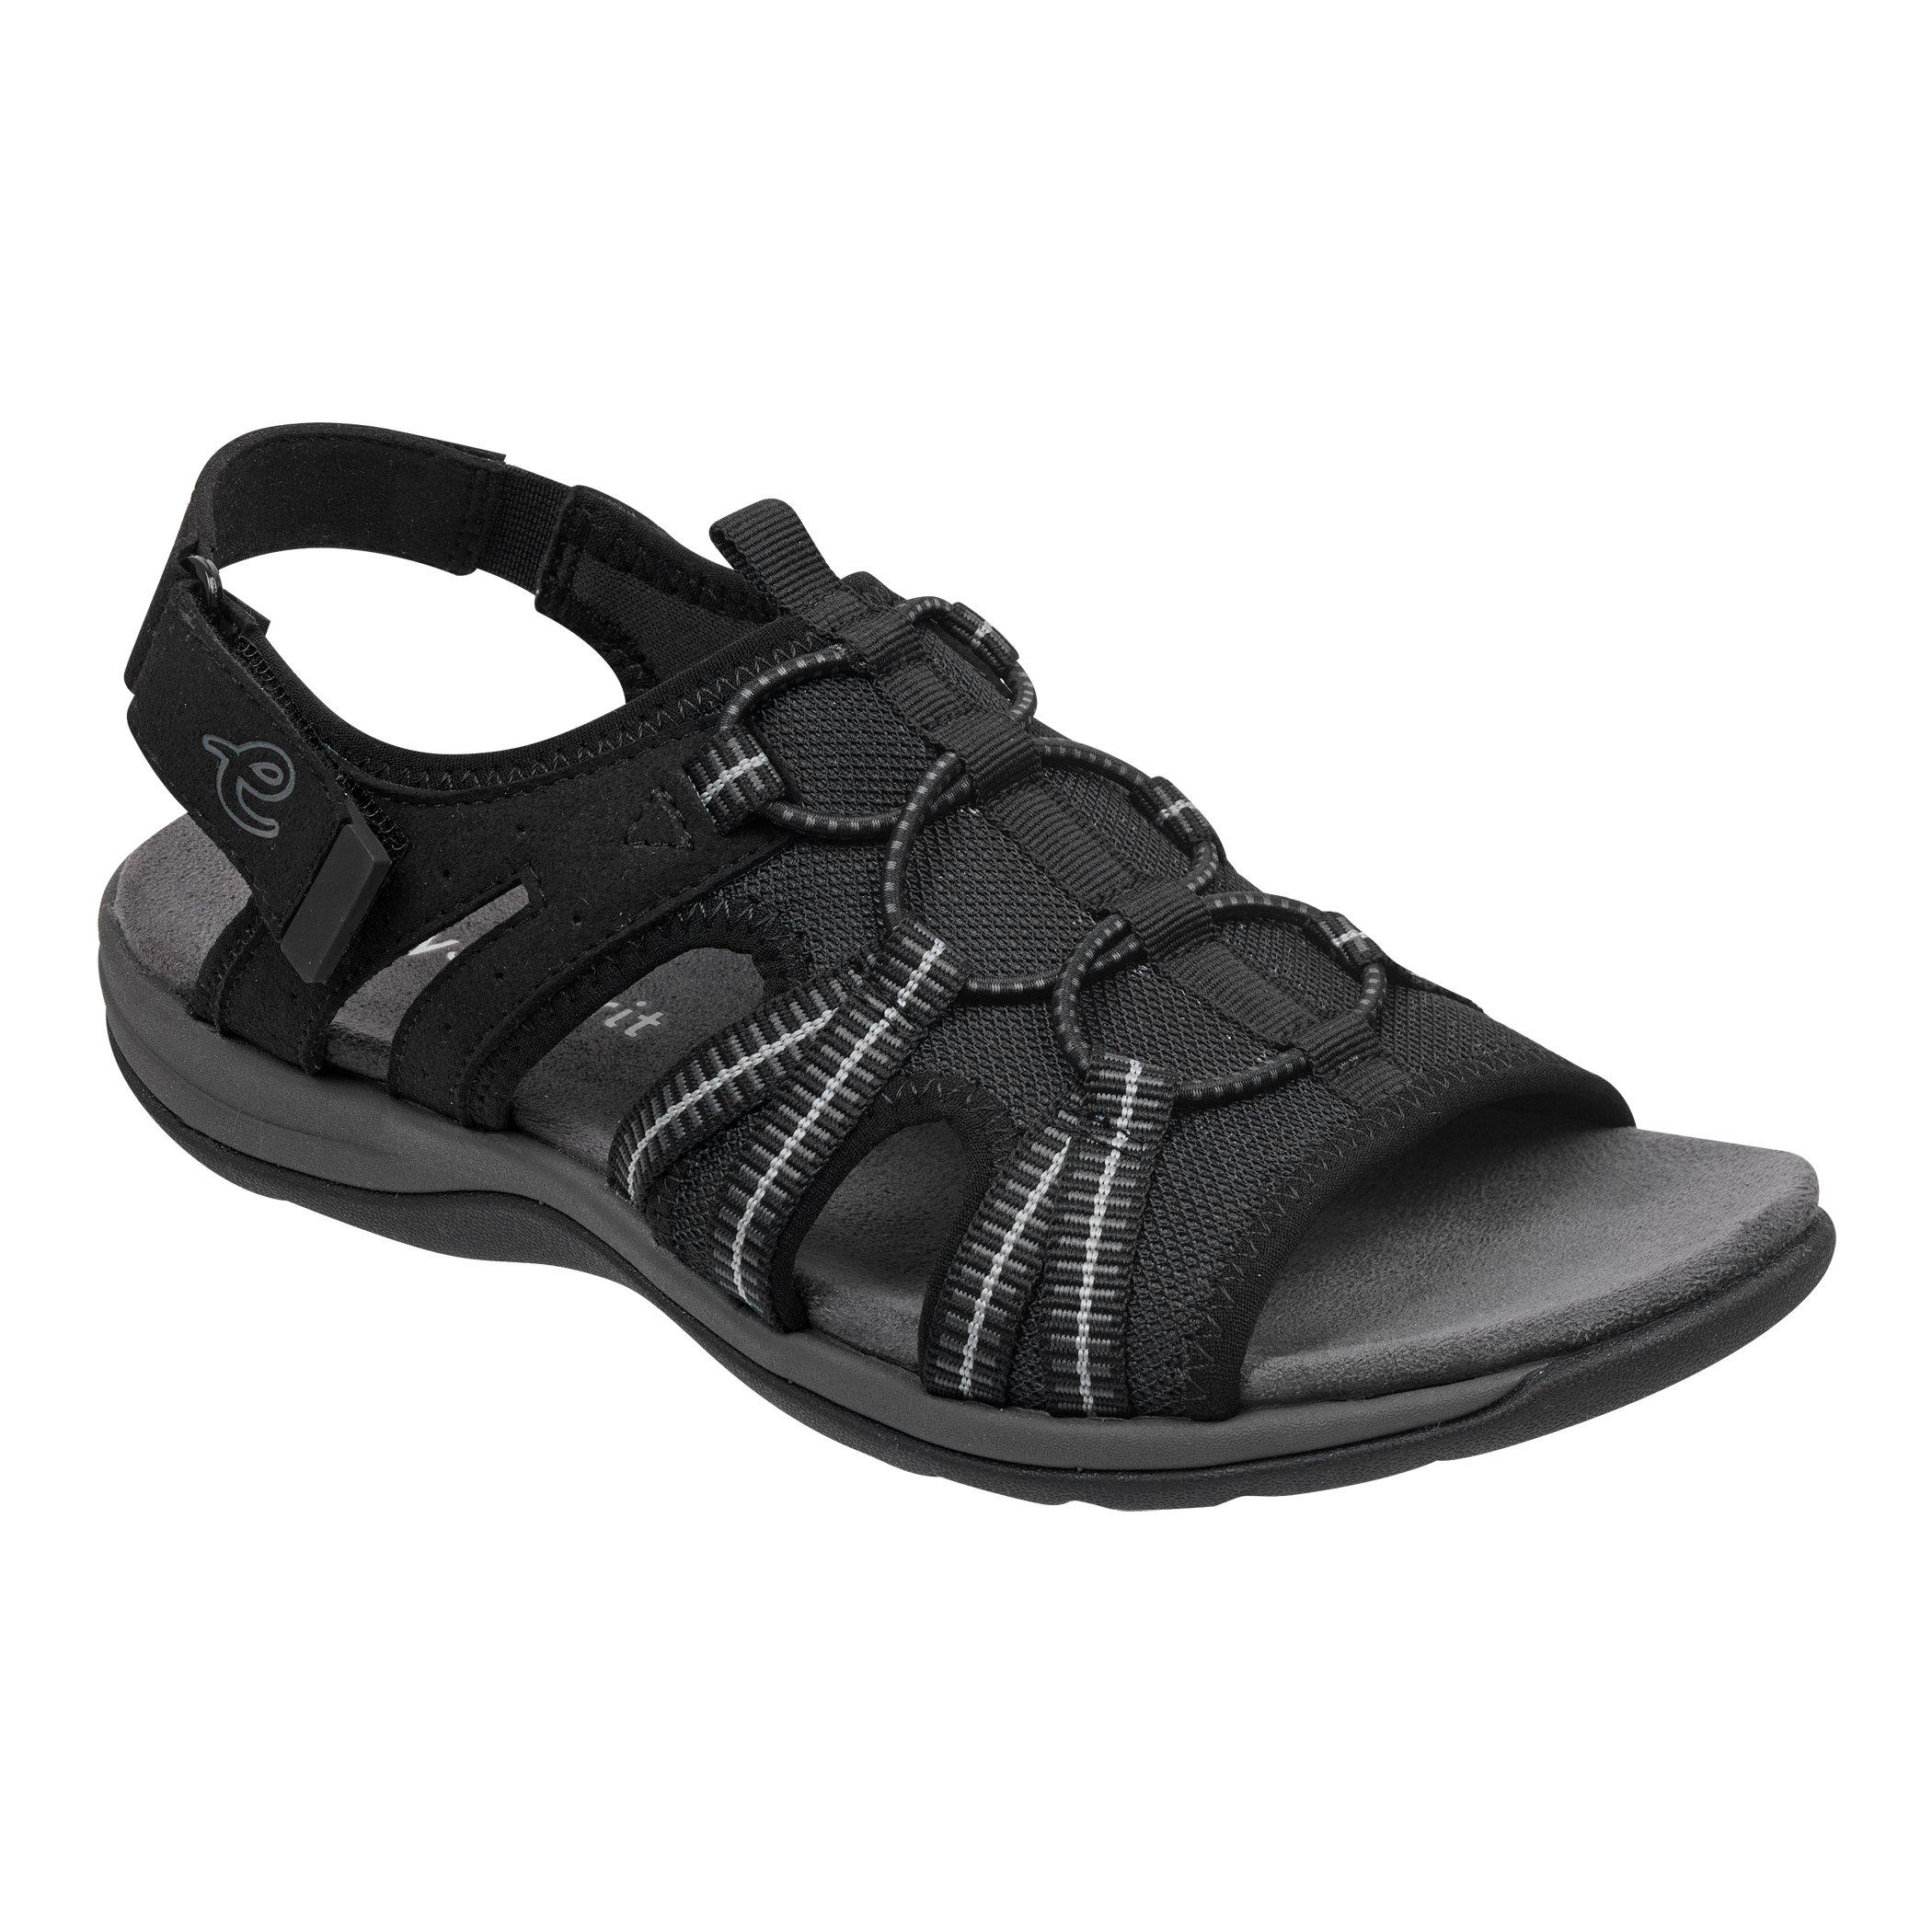 Easy Spirit Rubber Spark Flat Sandals in Black - Lyst